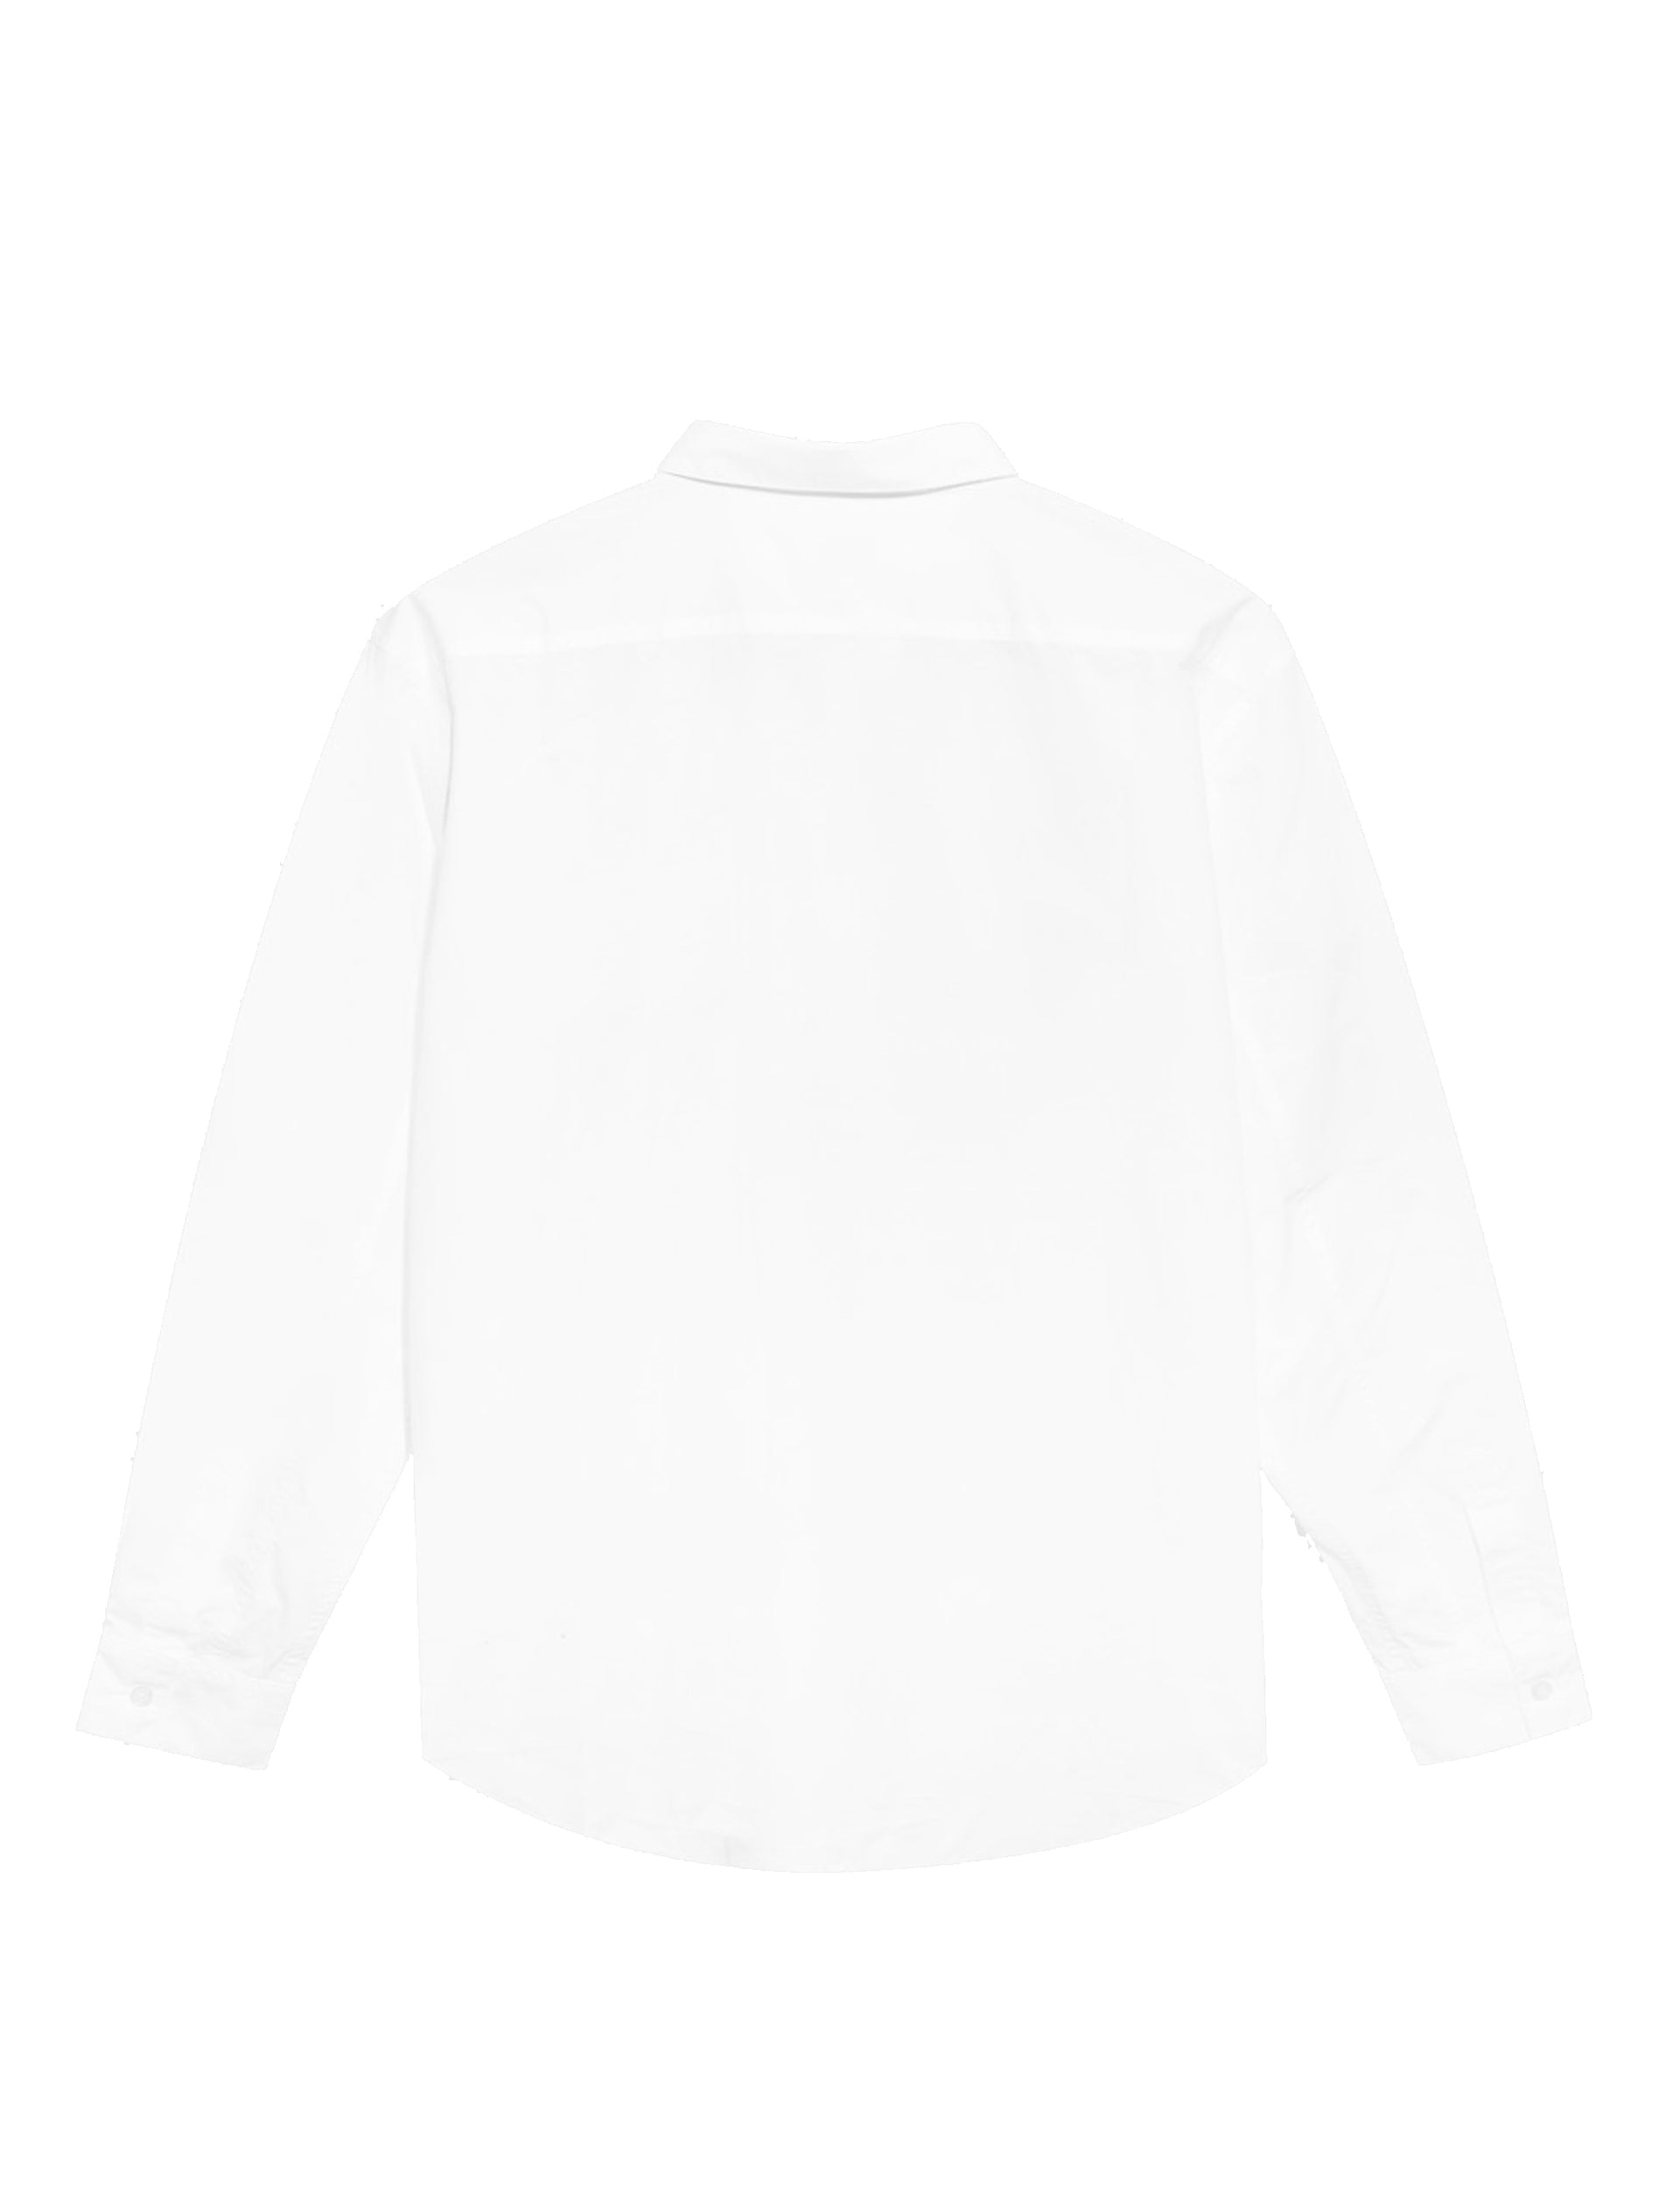 RECEPTION CLOTHING LOOSE FINANCIAL SHIRT COTTON POPLIN WHITE